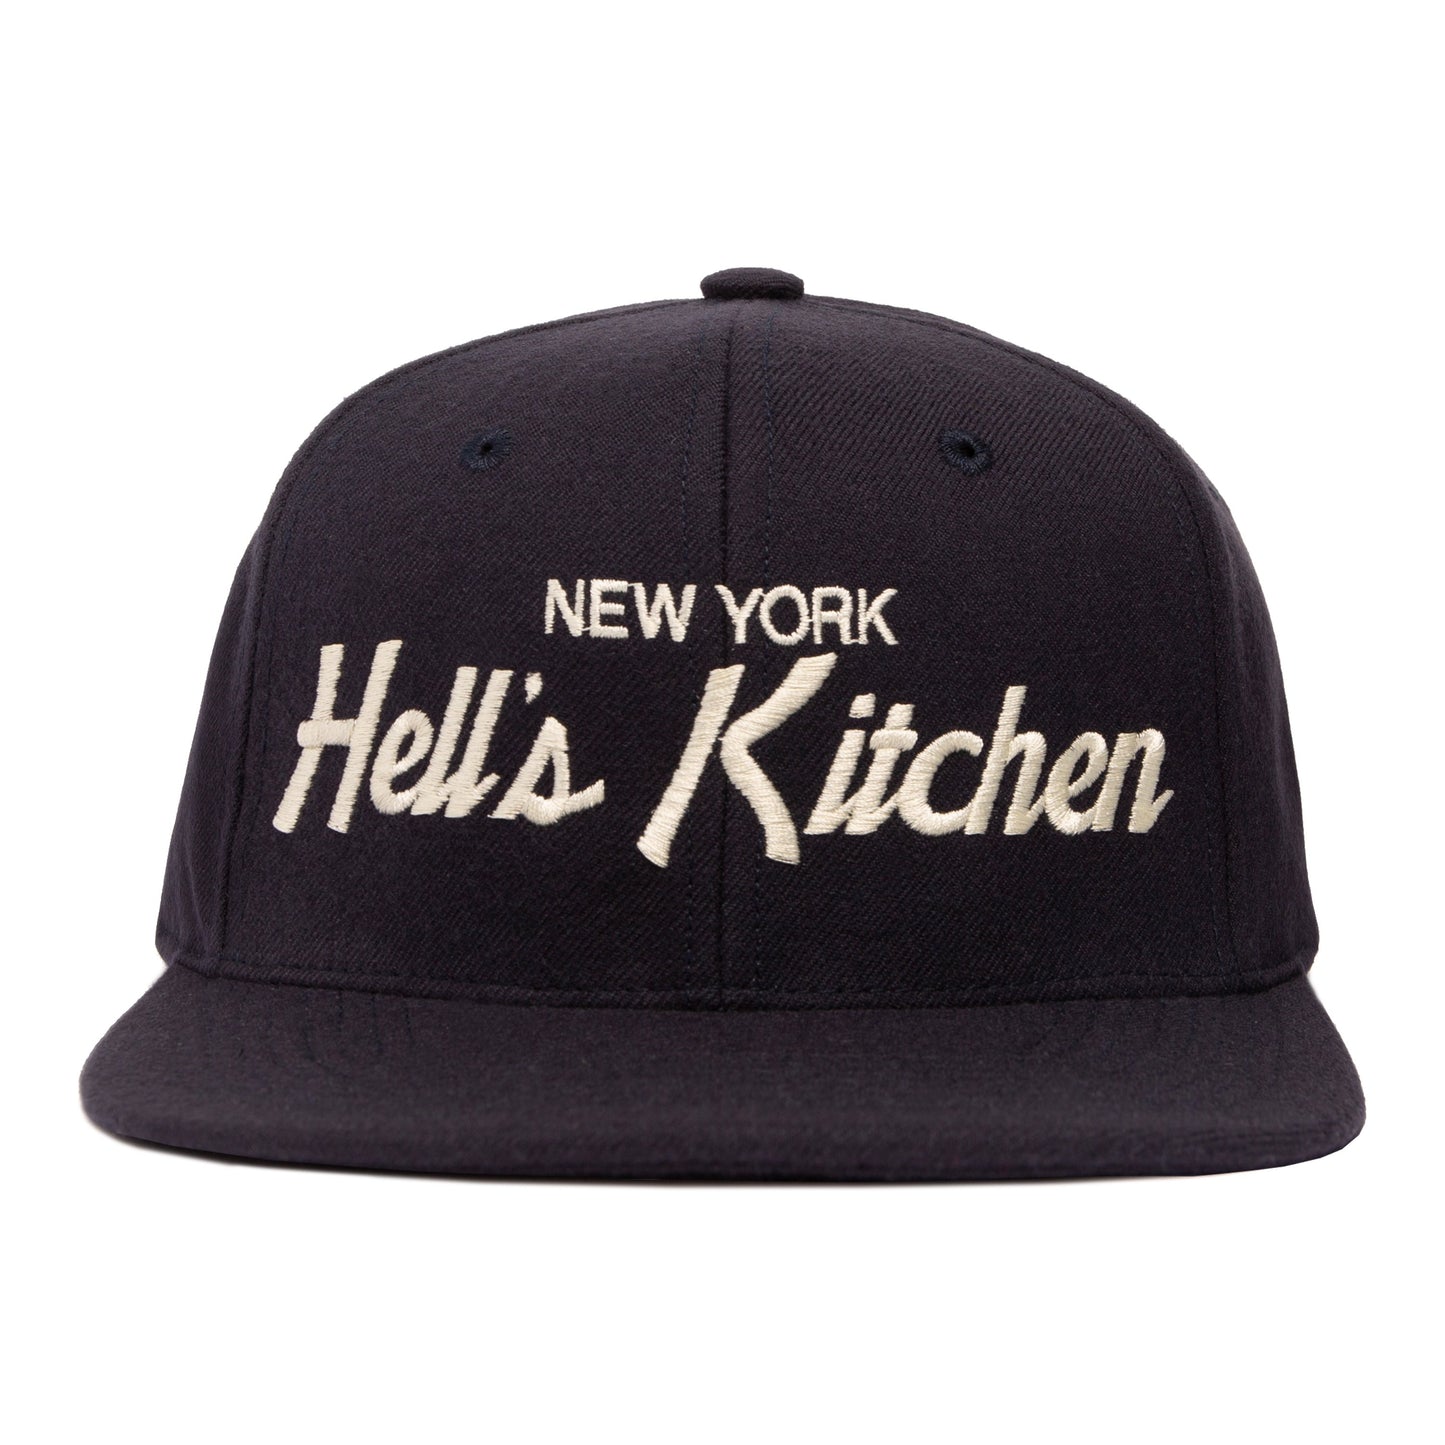 Hell's Kitchen Snapback Hat